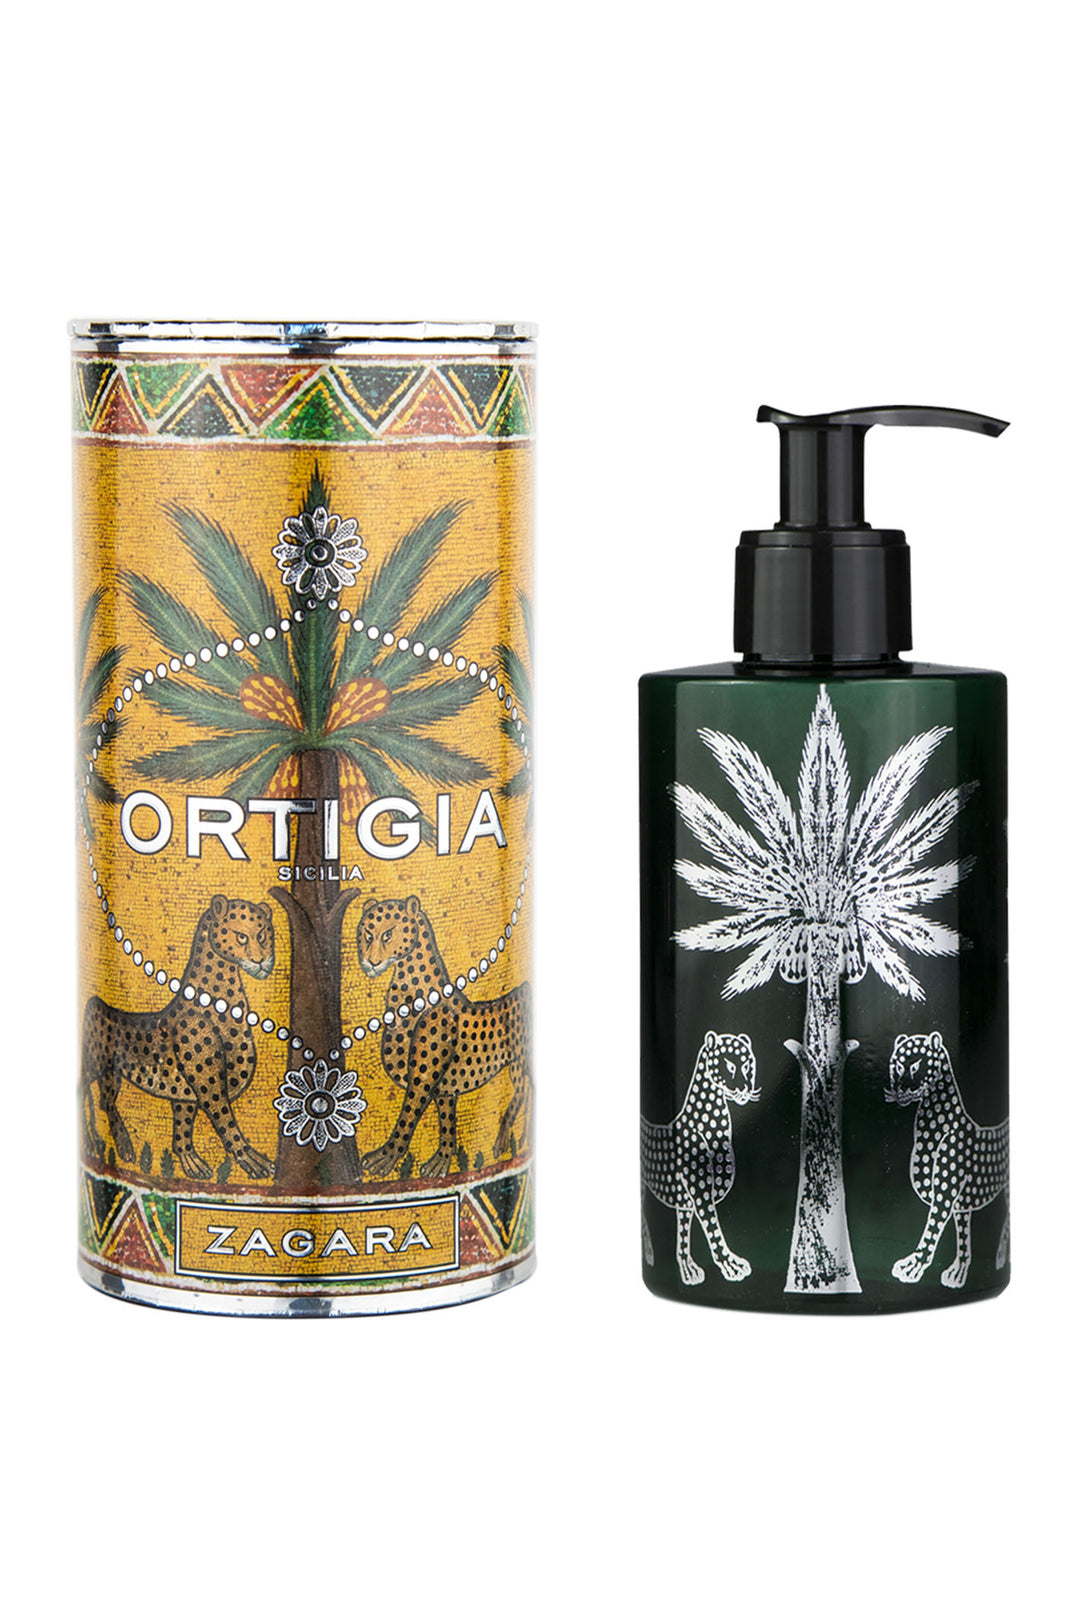 Ortigia Sicilia Zagara Perfume Body Cream 300ml - Olivia Grace Fashion